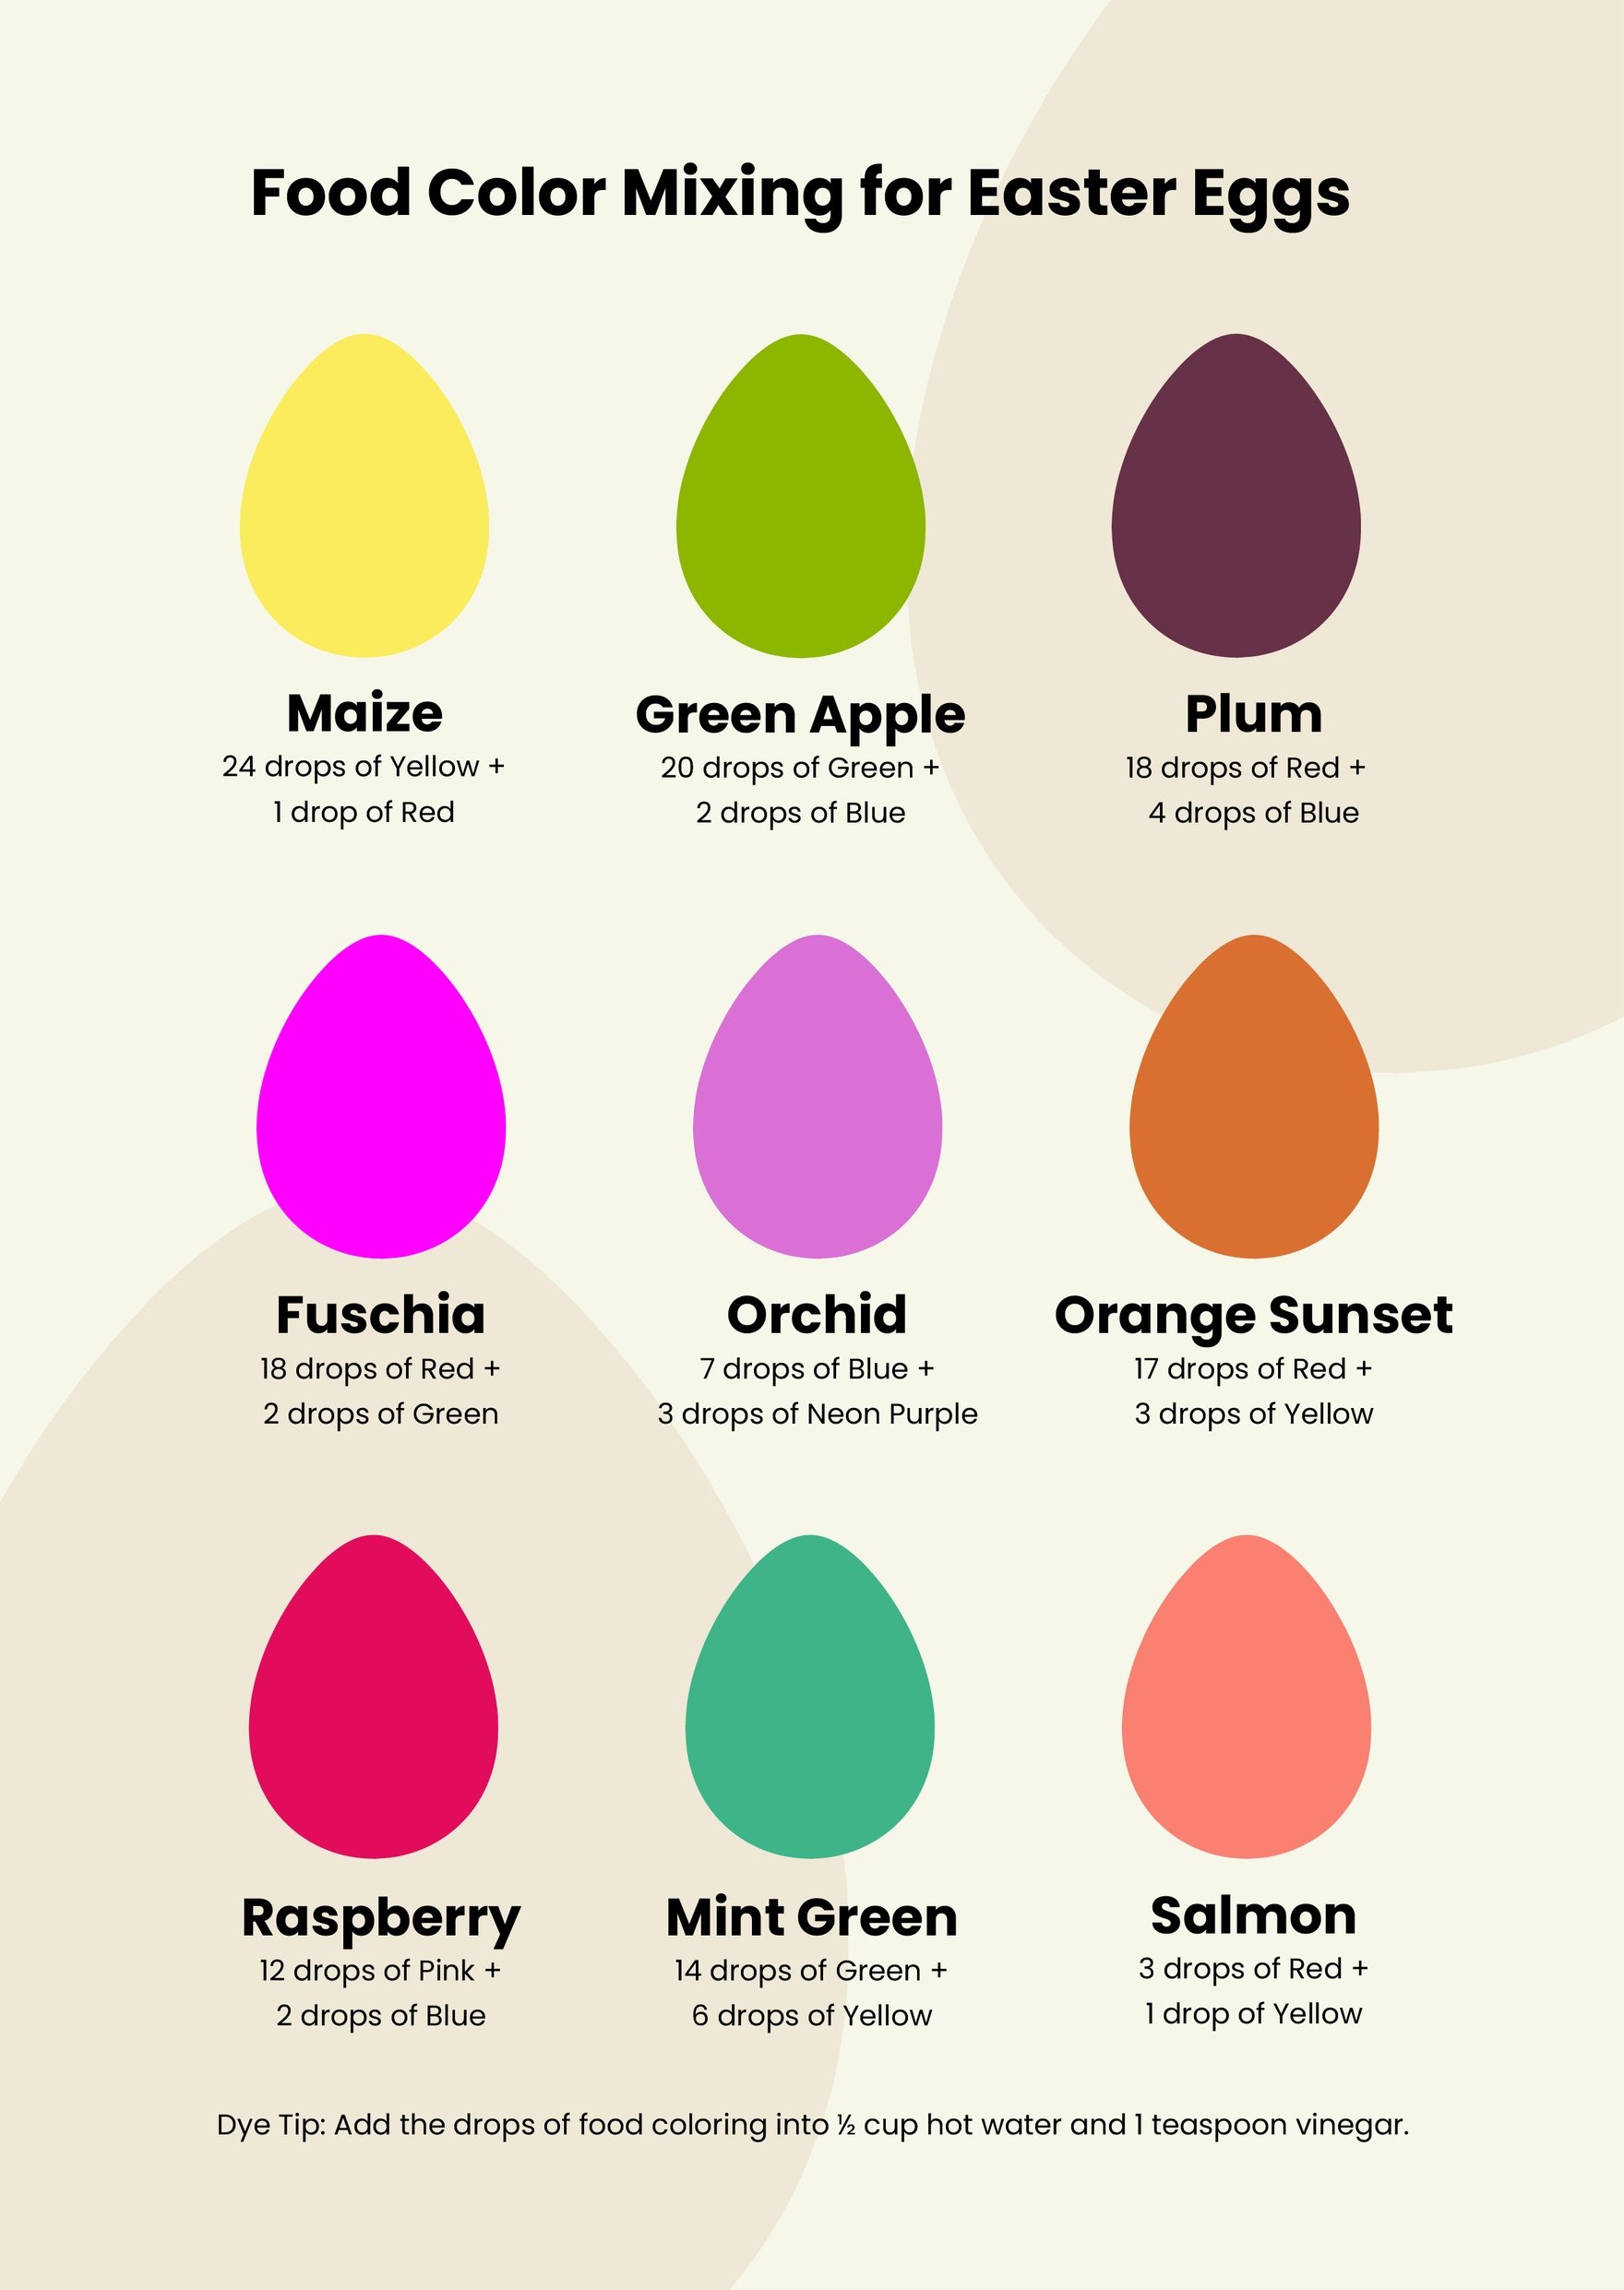 Food Coloring Mixing Chart